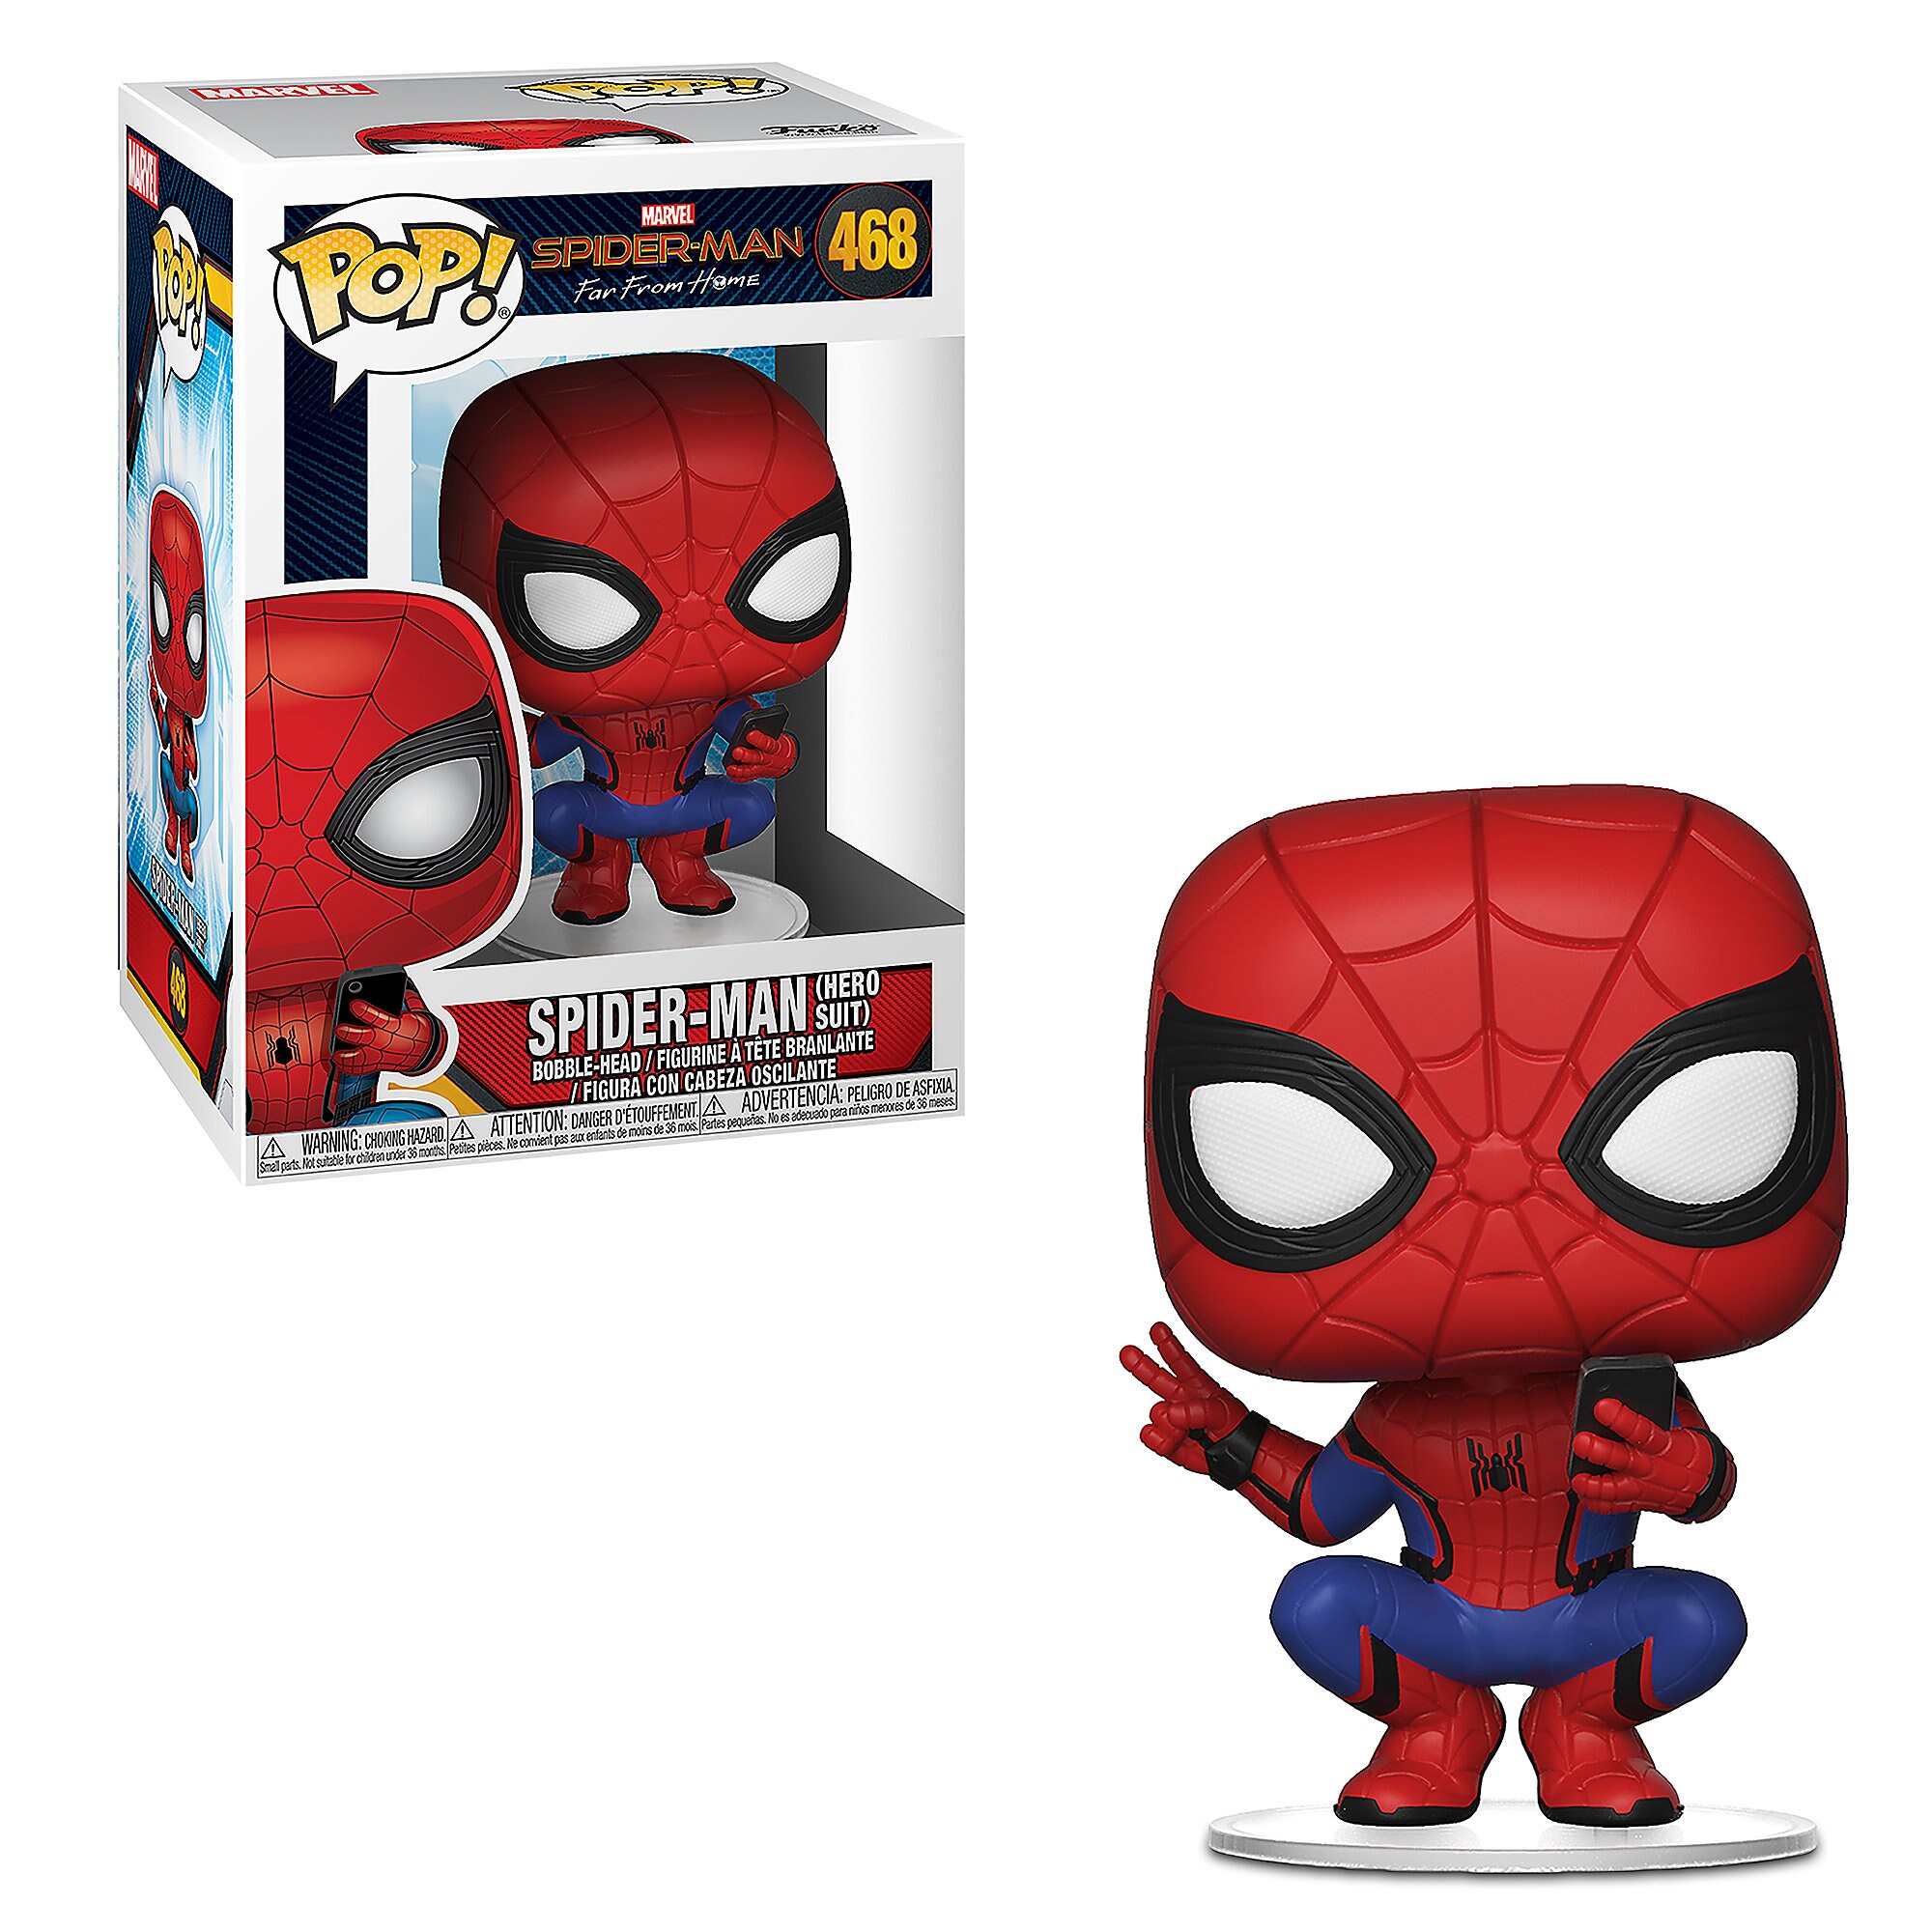 Spider-Man Hero Suit Pop! Vinyl Figure by Funko - Spider-Man: Far from Home